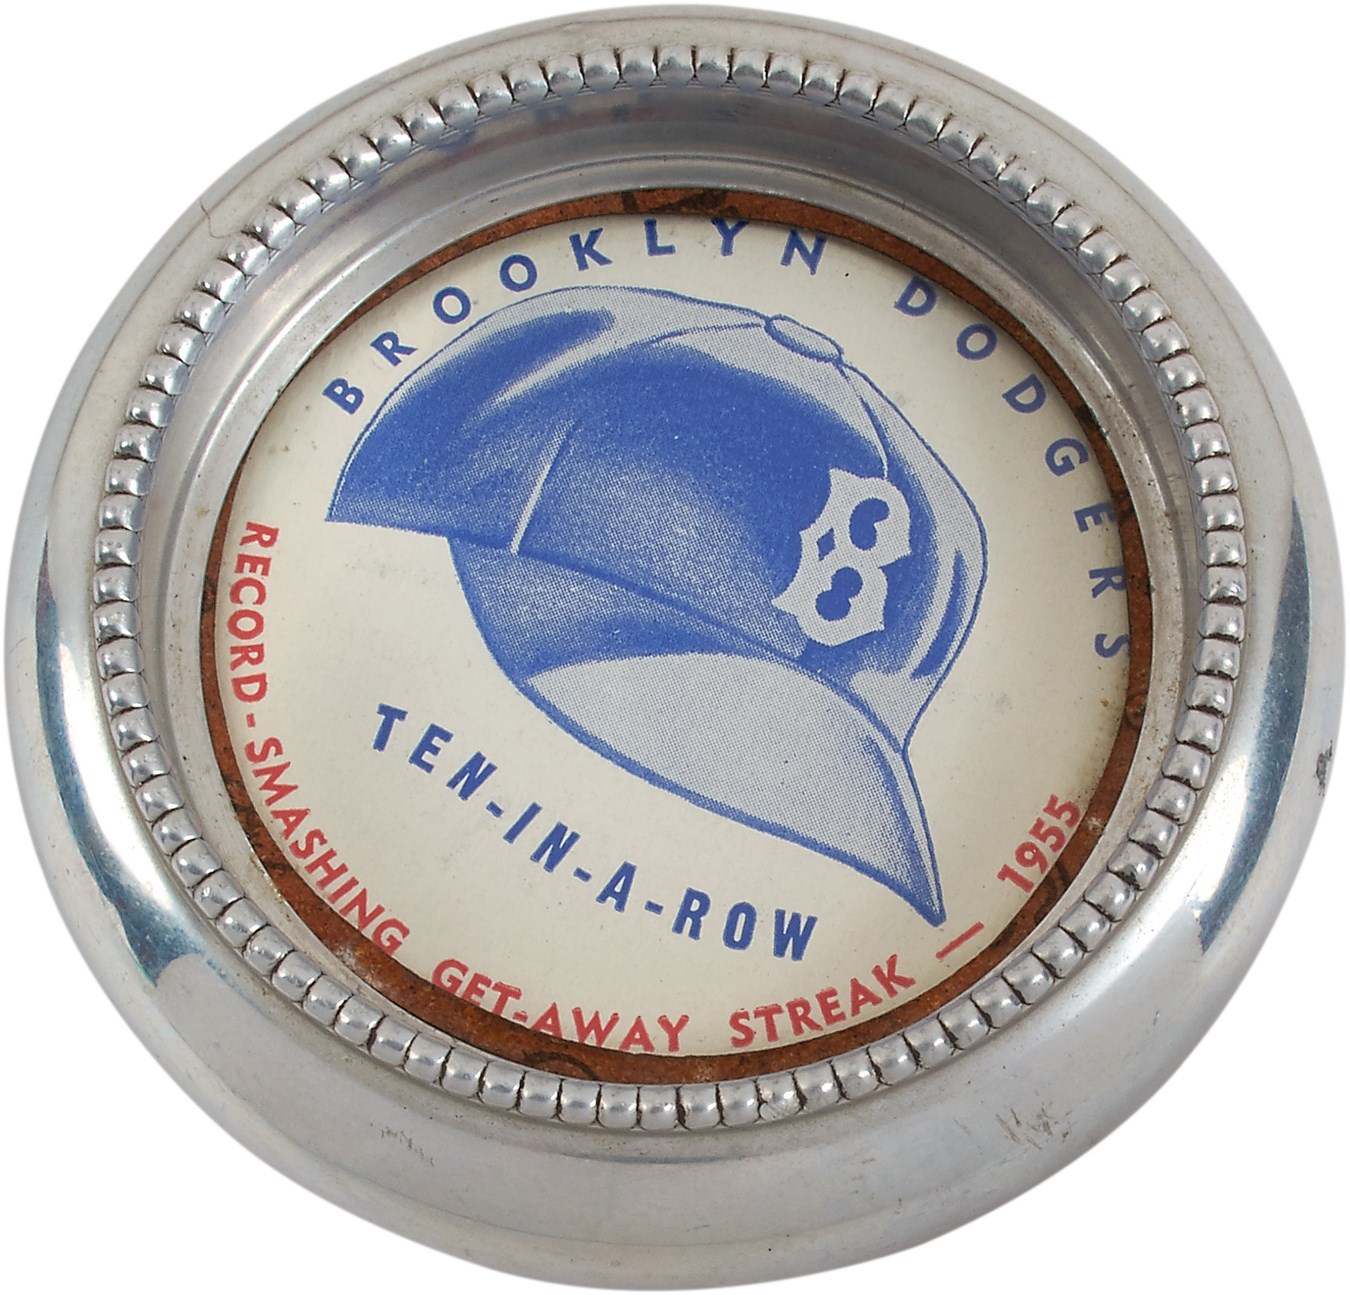 Jackie Robinson & Brooklyn Dodgers - 1955 World Champion Brooklyn Dodgers Glass Coaster